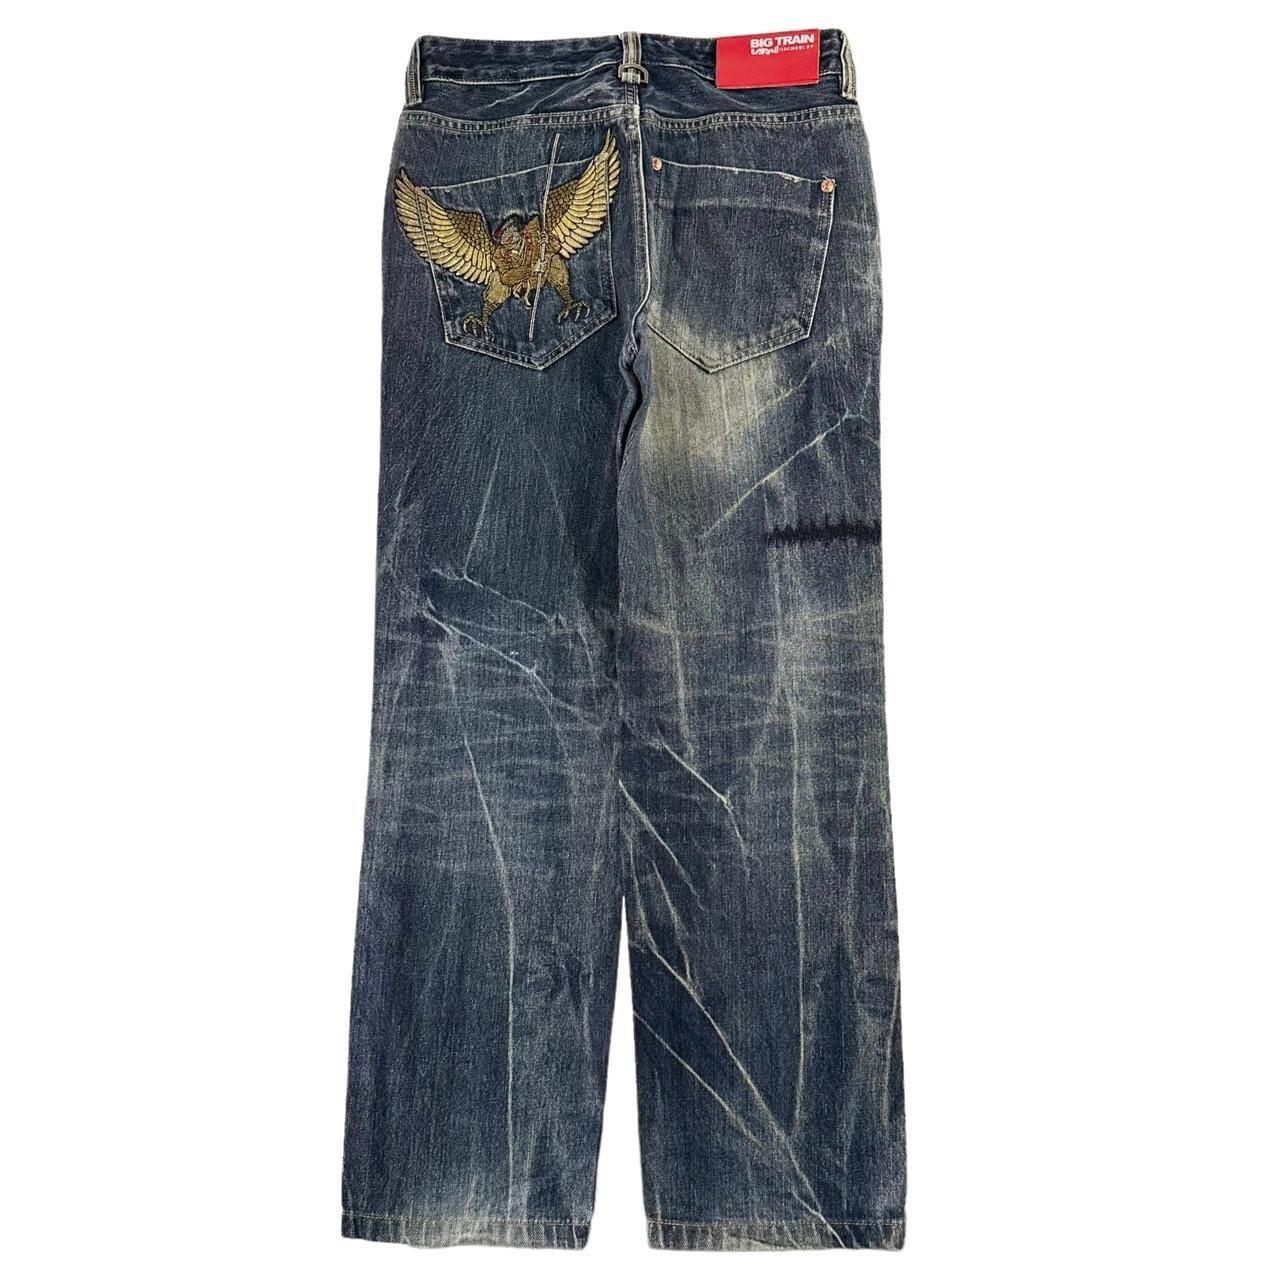 Vintage Eagle Japanese denim jeans trousers W30 - Known Source